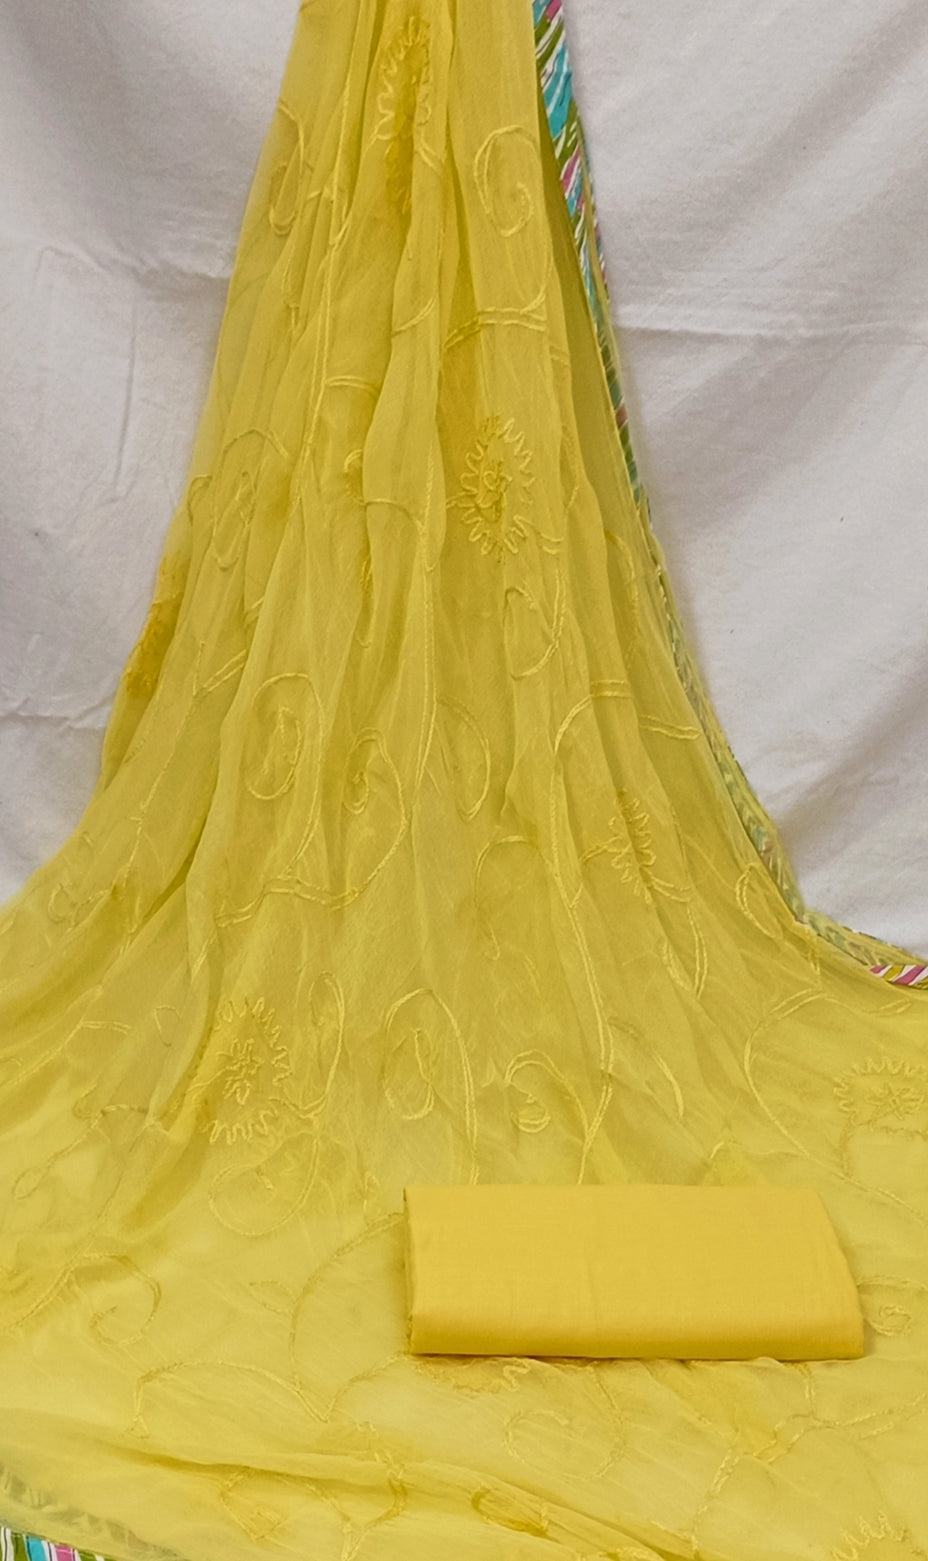 Multicolored Chevron Printed Unstitch Dress Material with Dupatta